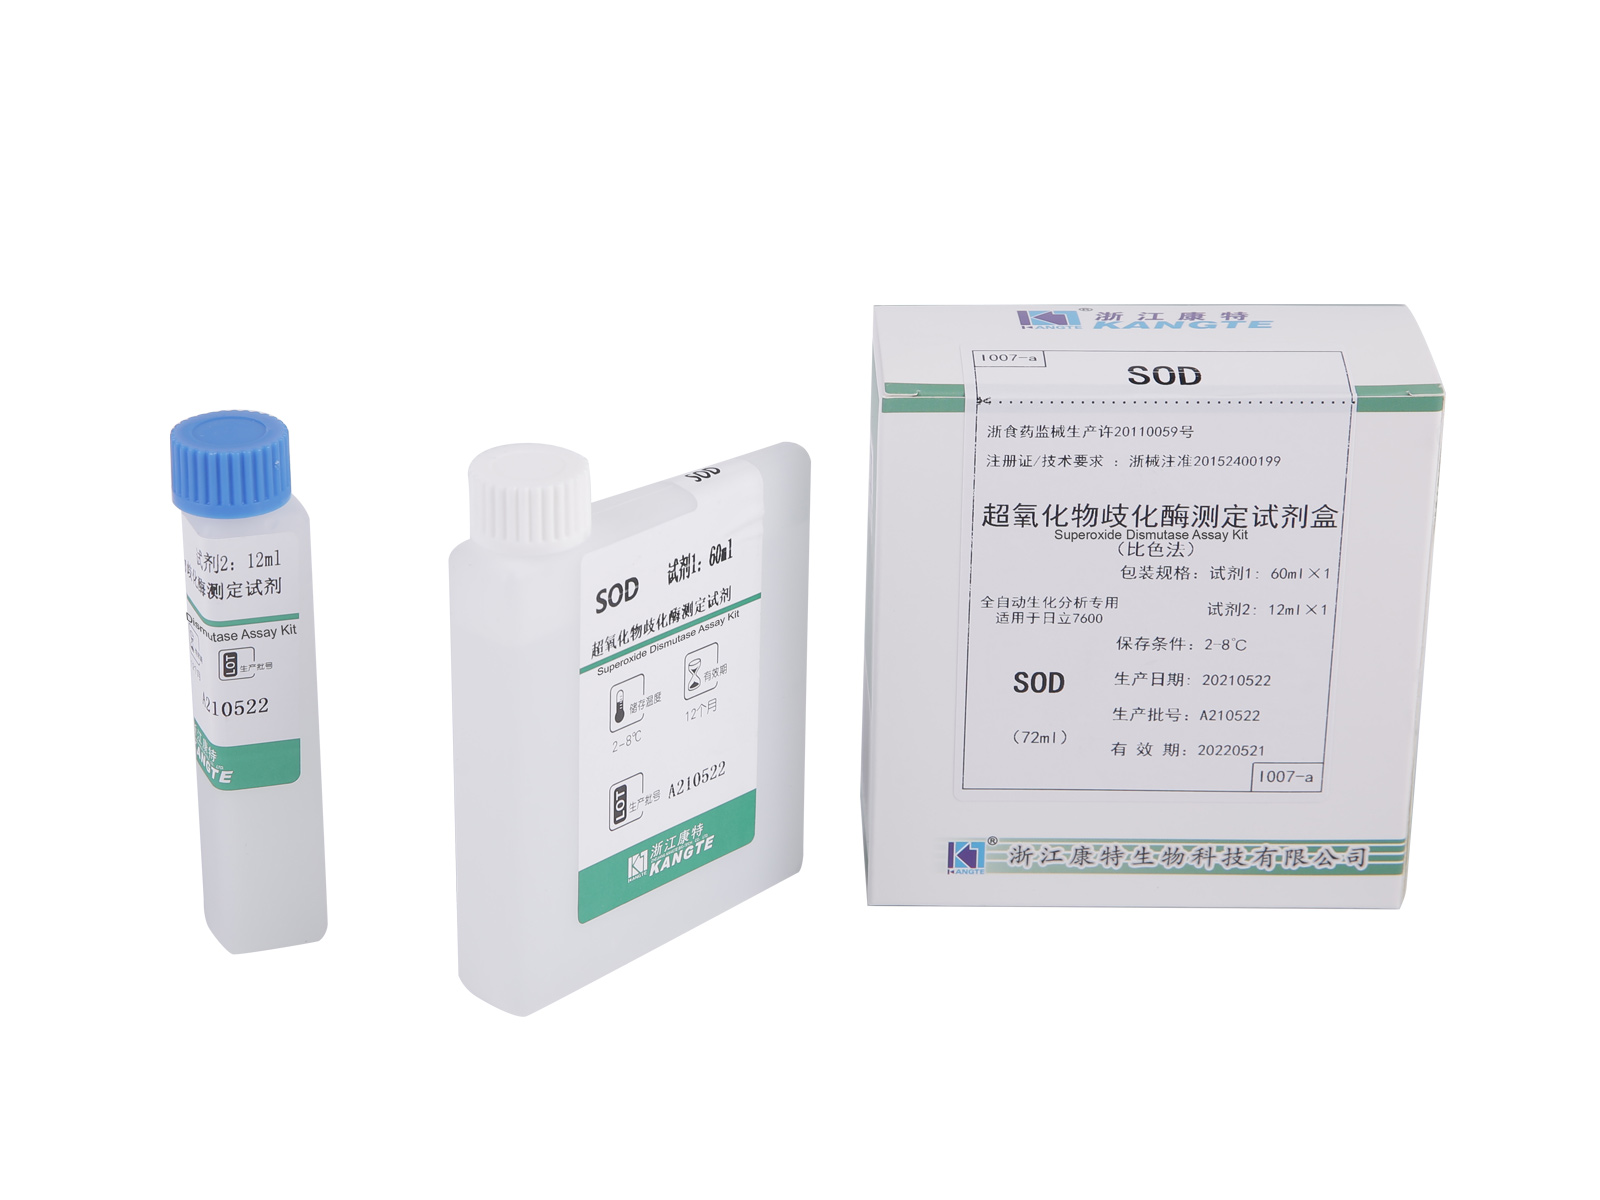 【SOD】 Kit de ensaio de superóxido dismutase (método colorimétrico)